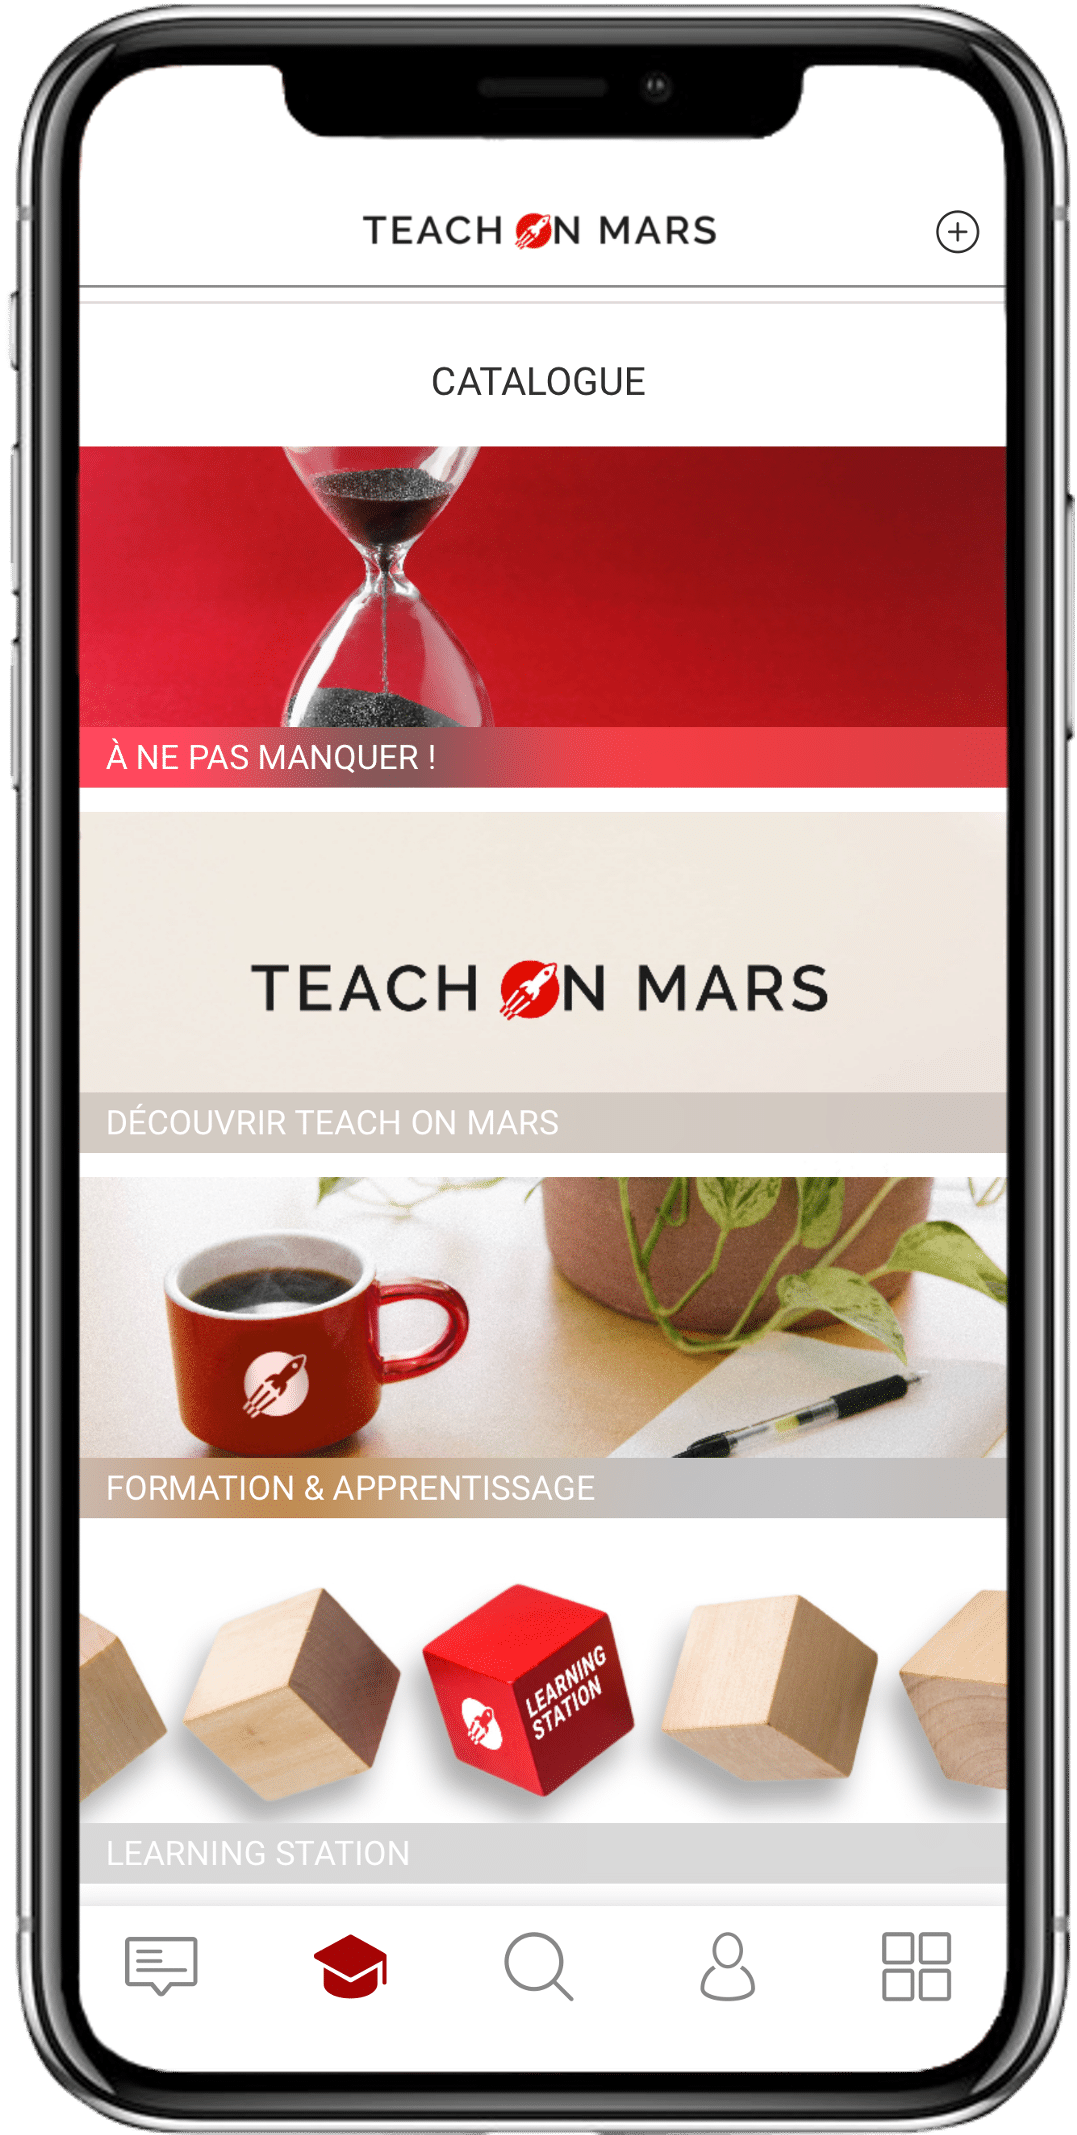 Interface de l'application Teach on Mars